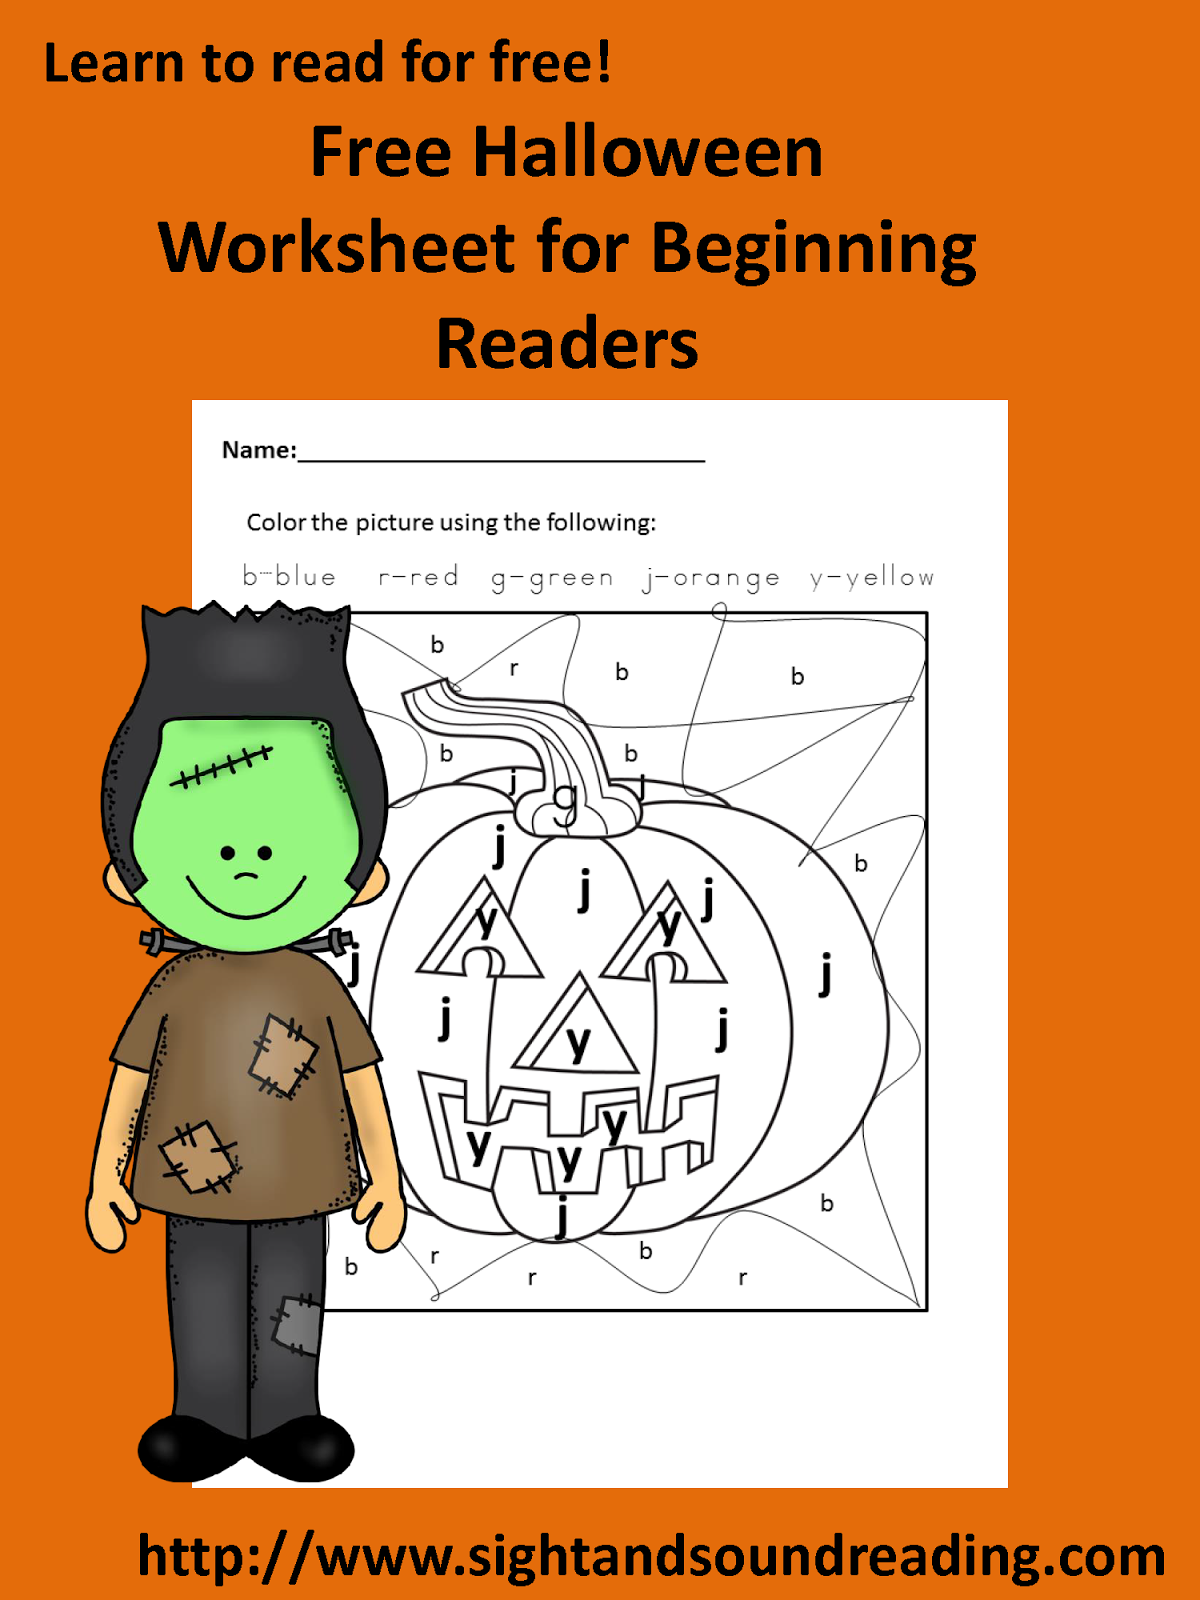 Colorletter Halloween Worksheet | Halloween Worksheets